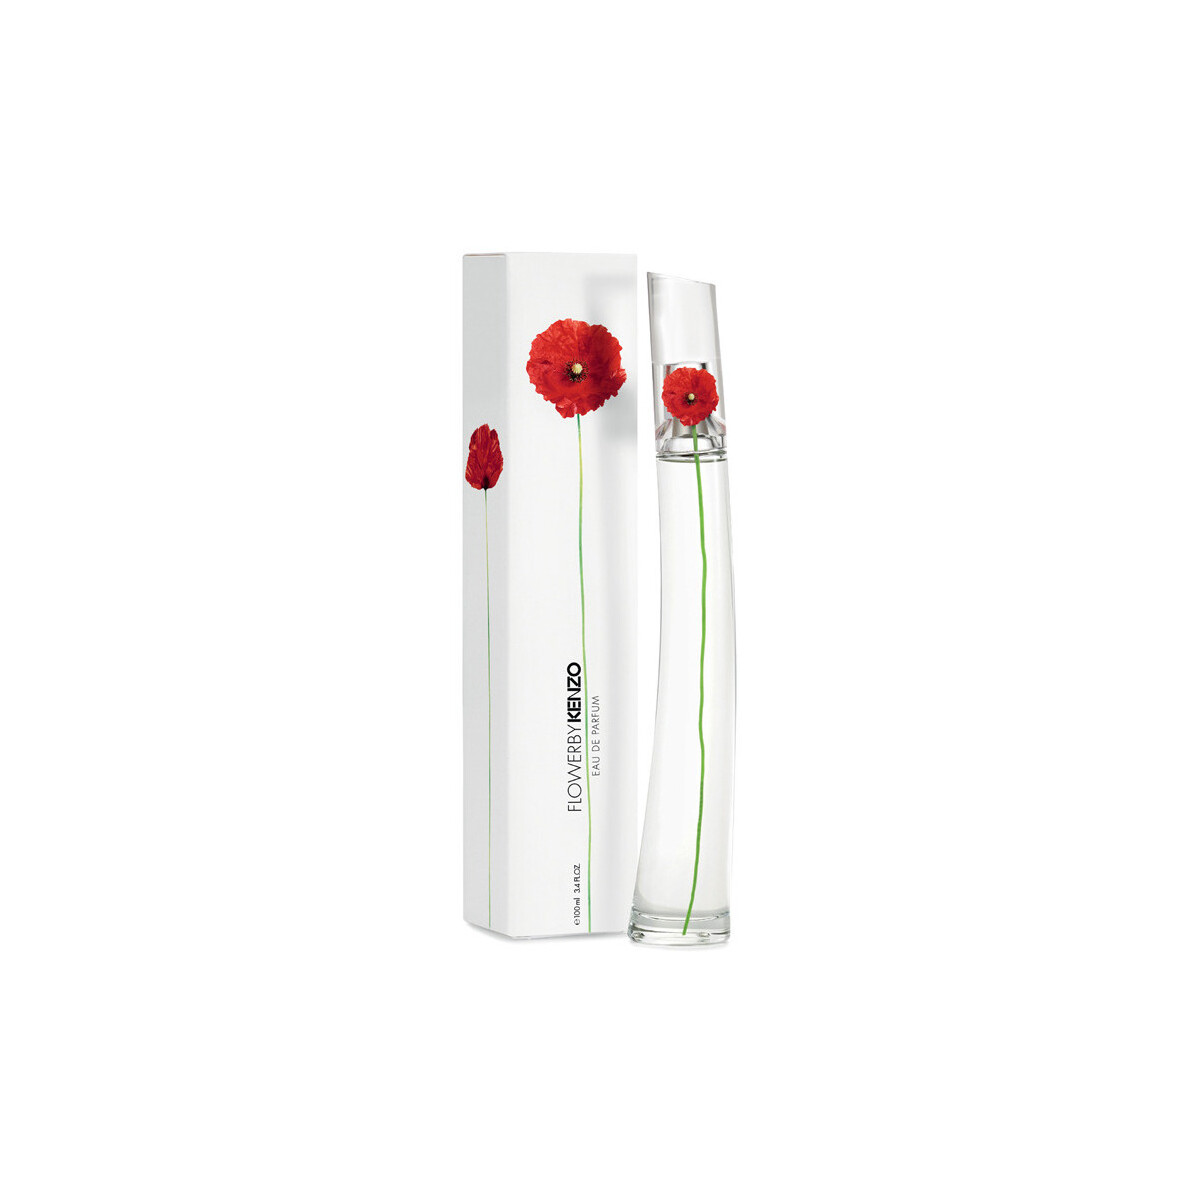 Beauté Femme Eau de parfum Kenzo Flower - eau de parfum - 100ml - vaporisateur Flower - perfume - 100ml - spray